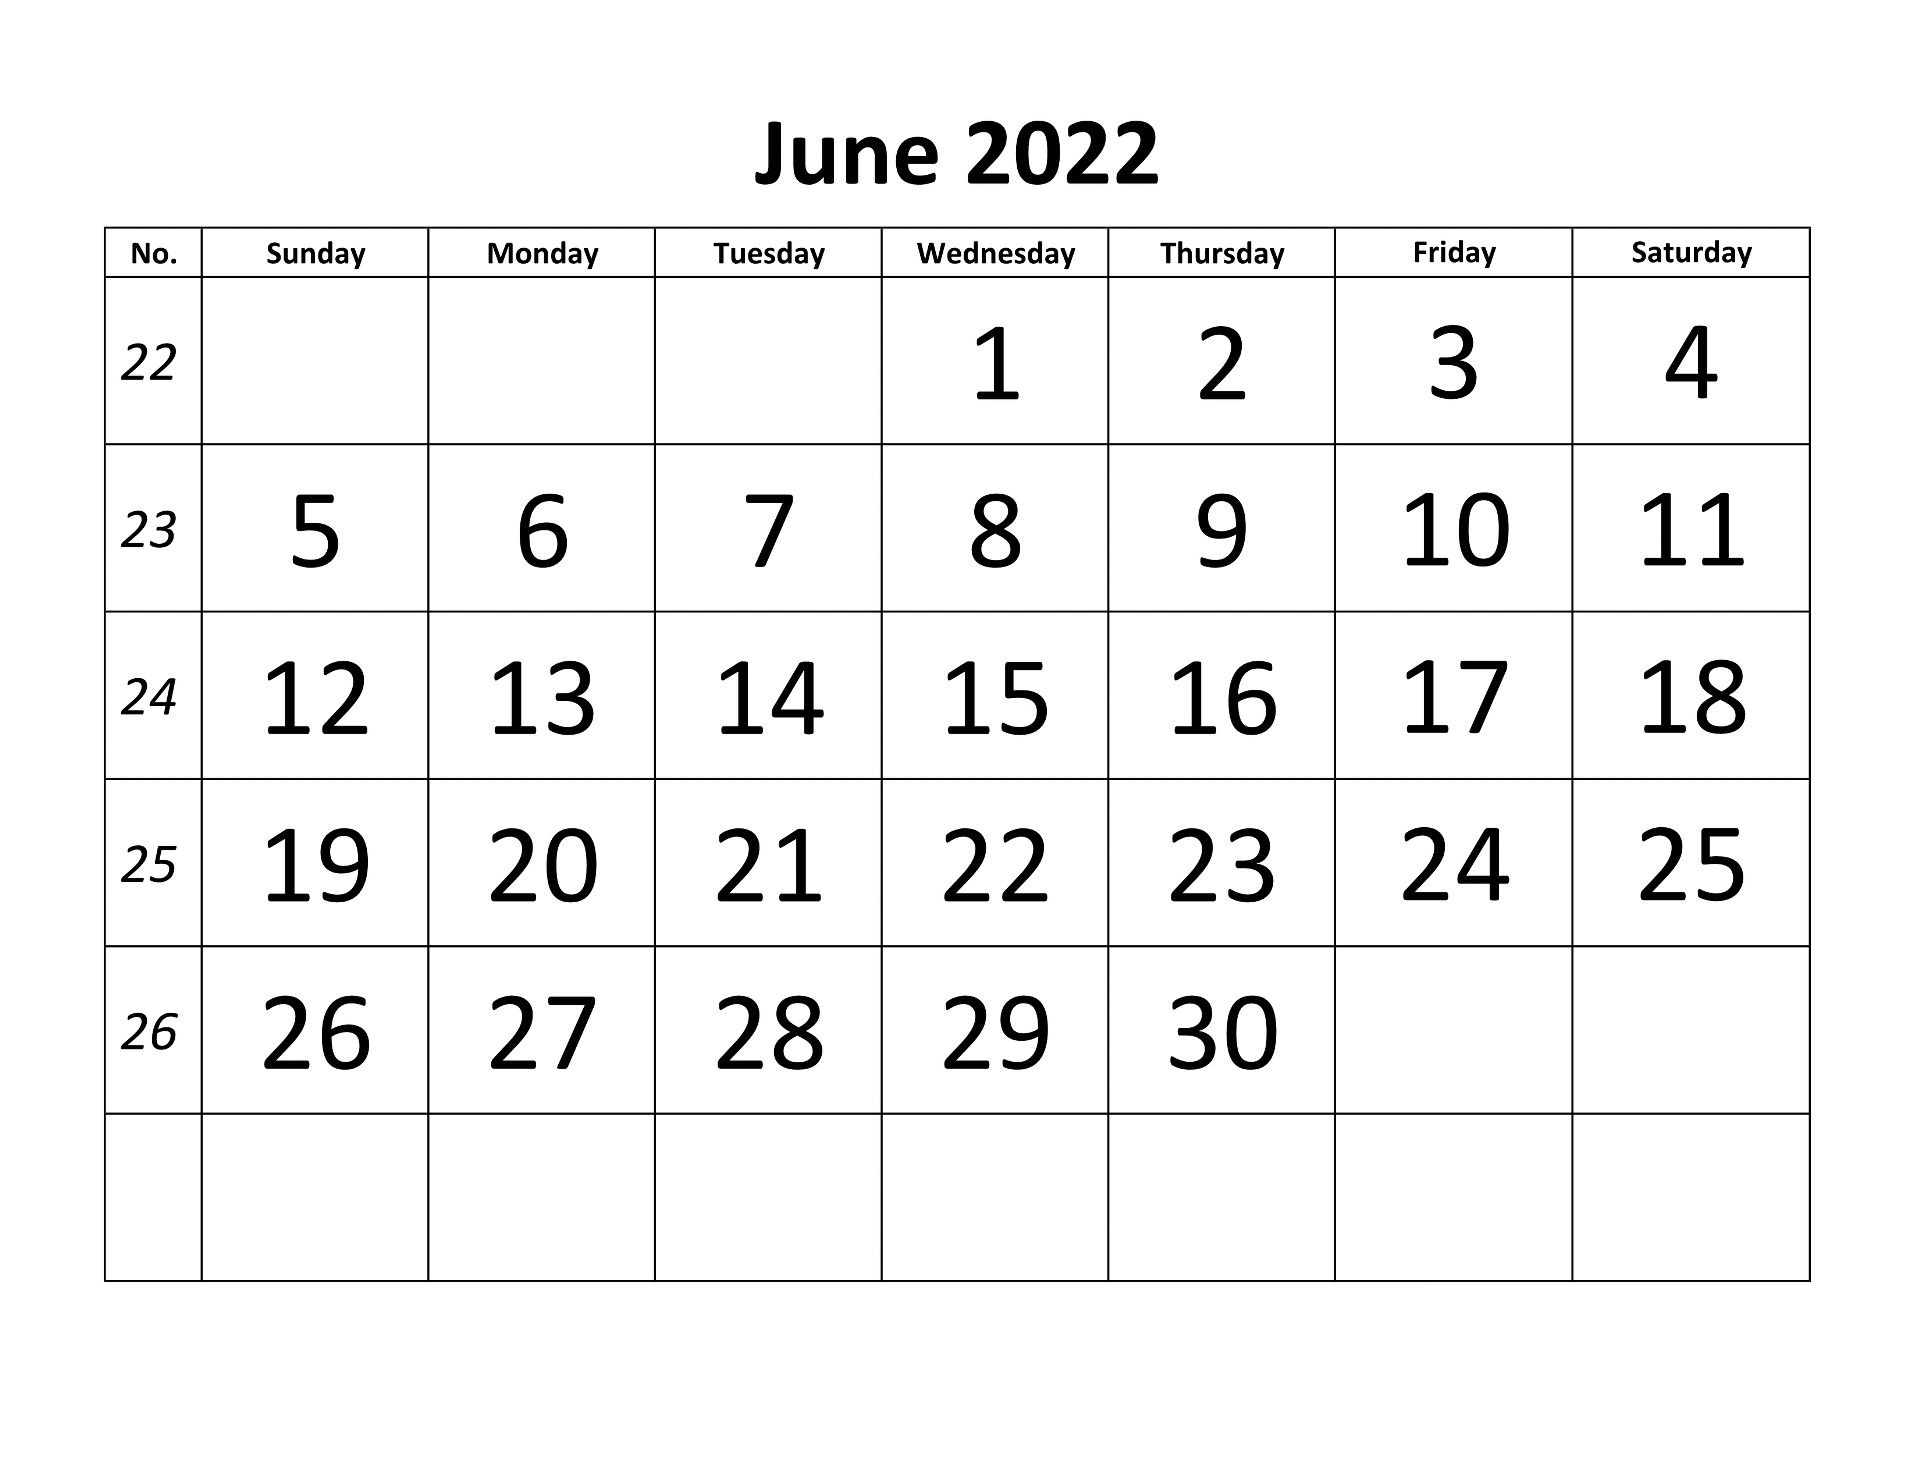 June 2022 Calendar With Holidays PDF